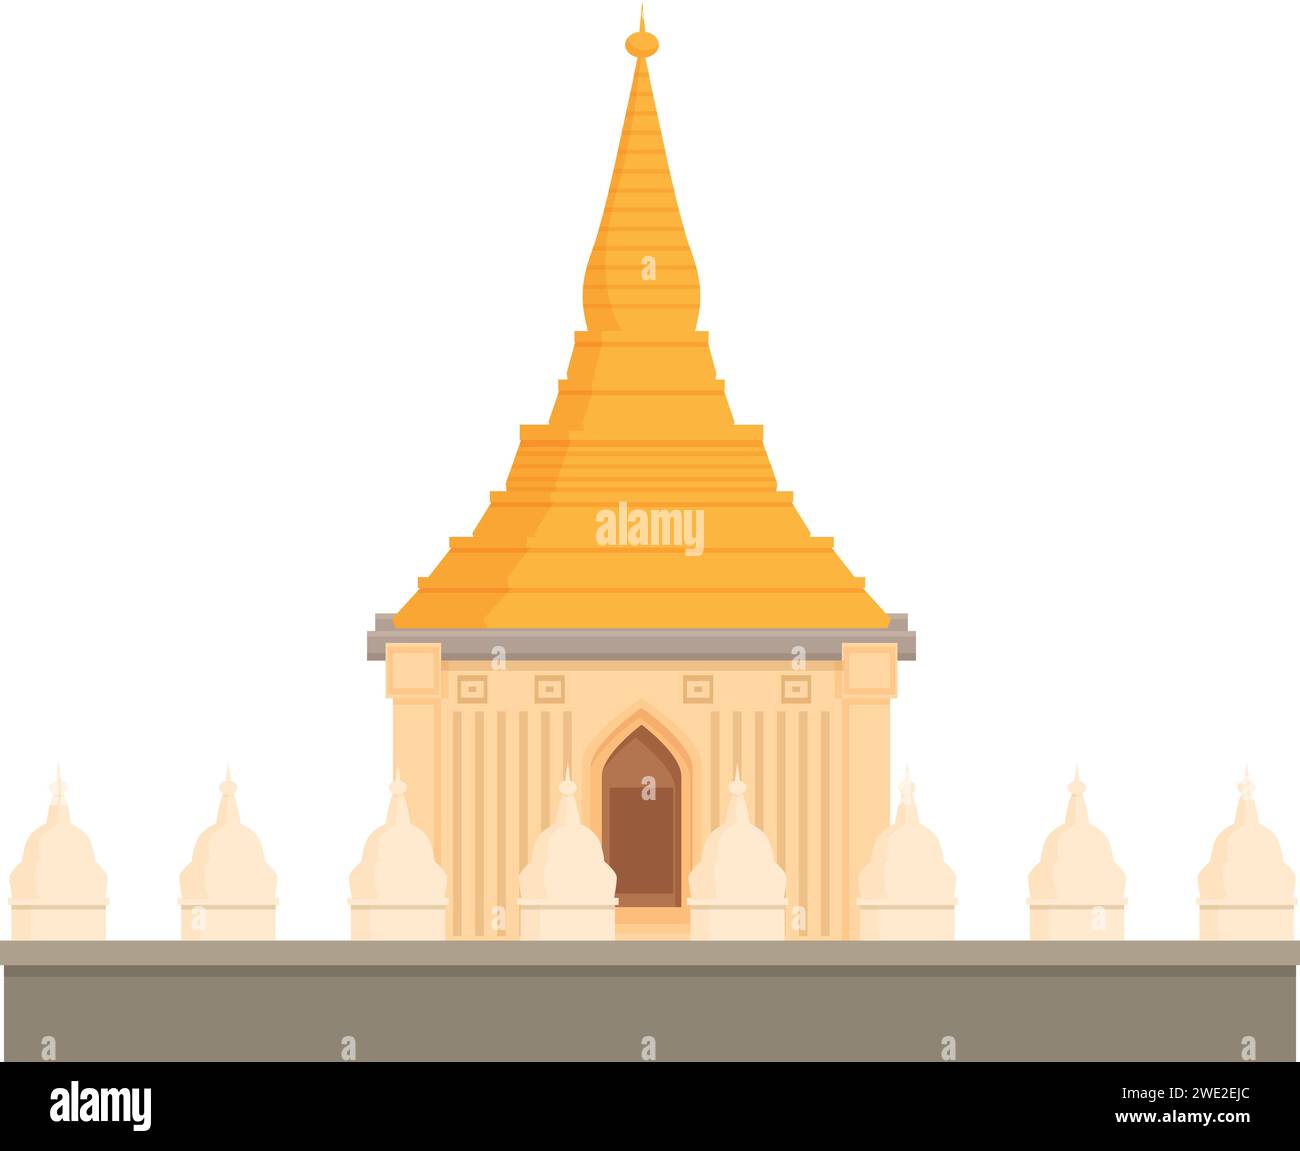 Temple festival icon cartoon vector. Myanmar country. Landmark architecture Stock Vector